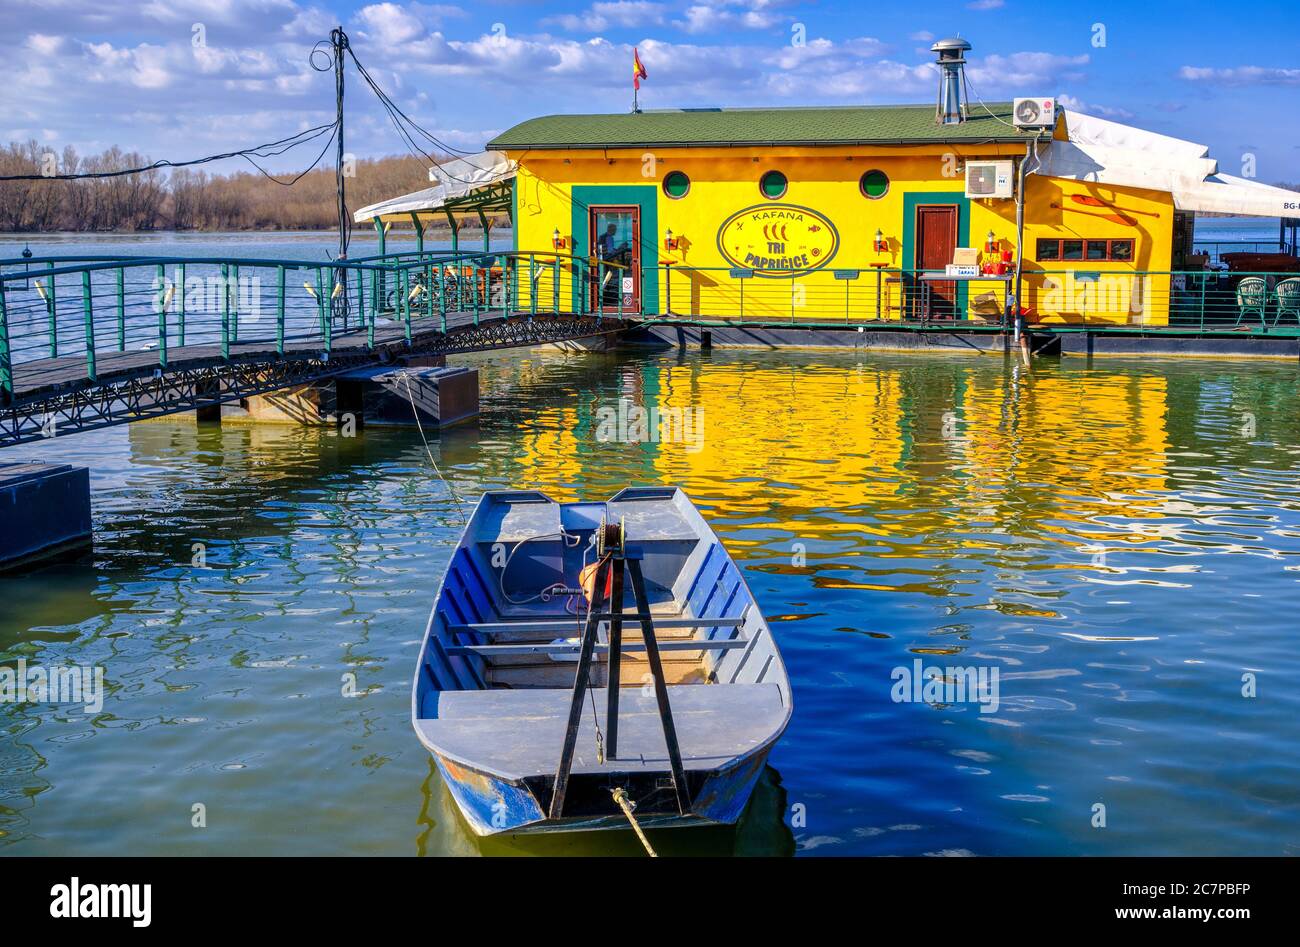 Belgrade / Serbia - February 22, 2020: River raft restaurant and bar on the Danube river in Belgrade, Serbia Stock Photo